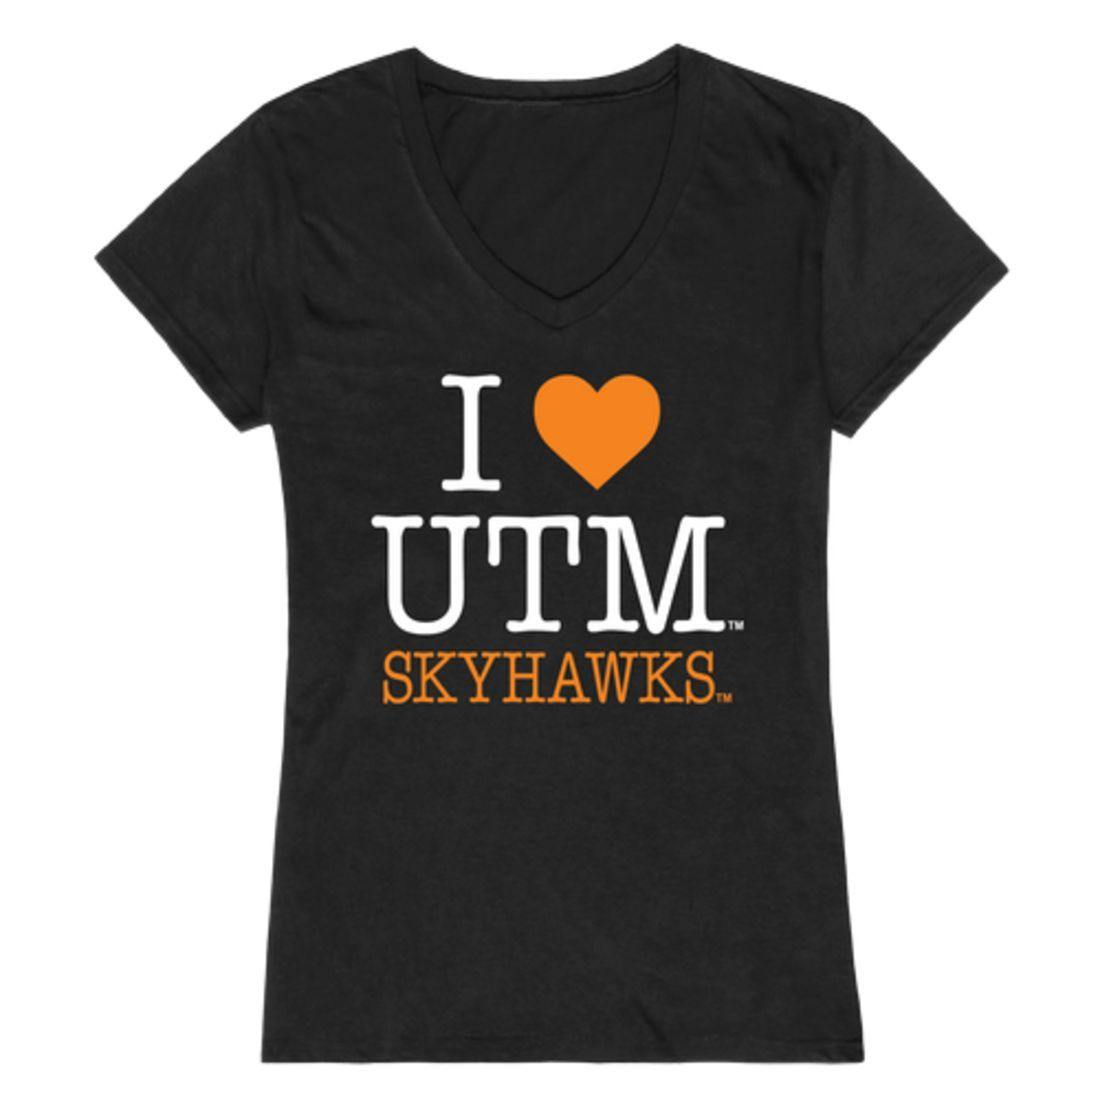 I Love UT University of Tennessee at Martin Skyhawks Womens T-Shirt-Campus-Wardrobe